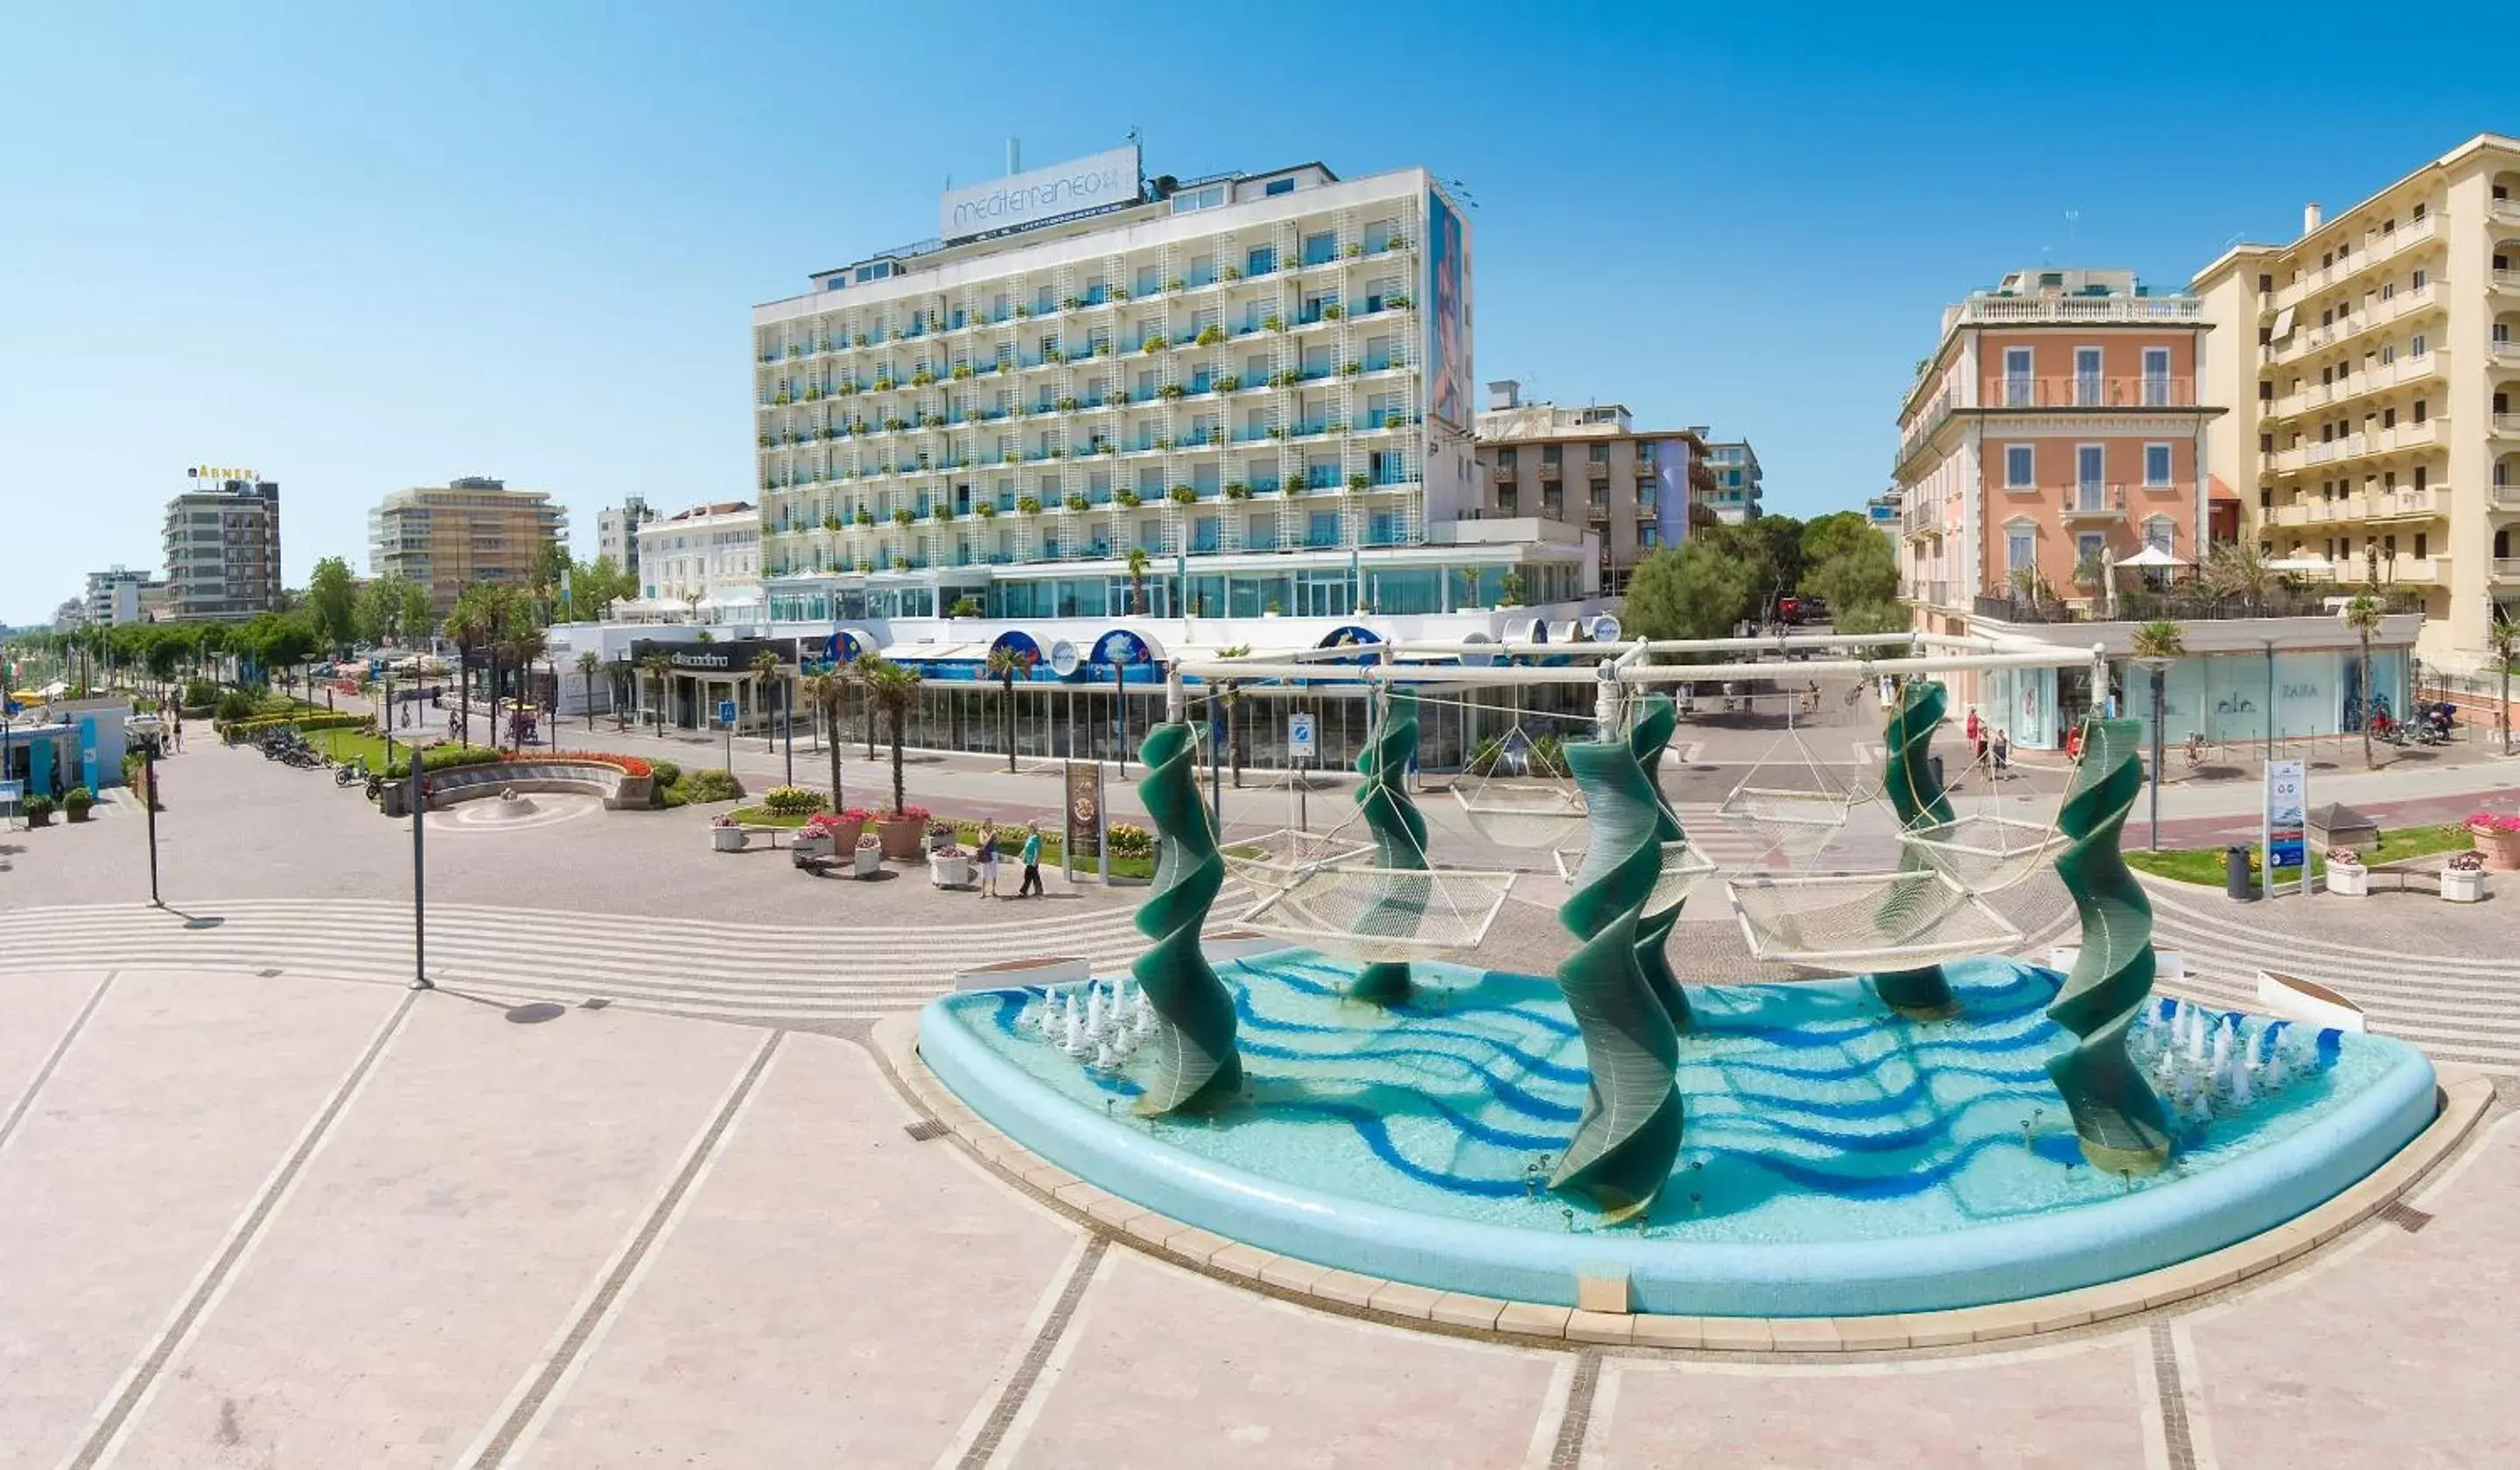 Area and facilities in Hotel Mediterraneo